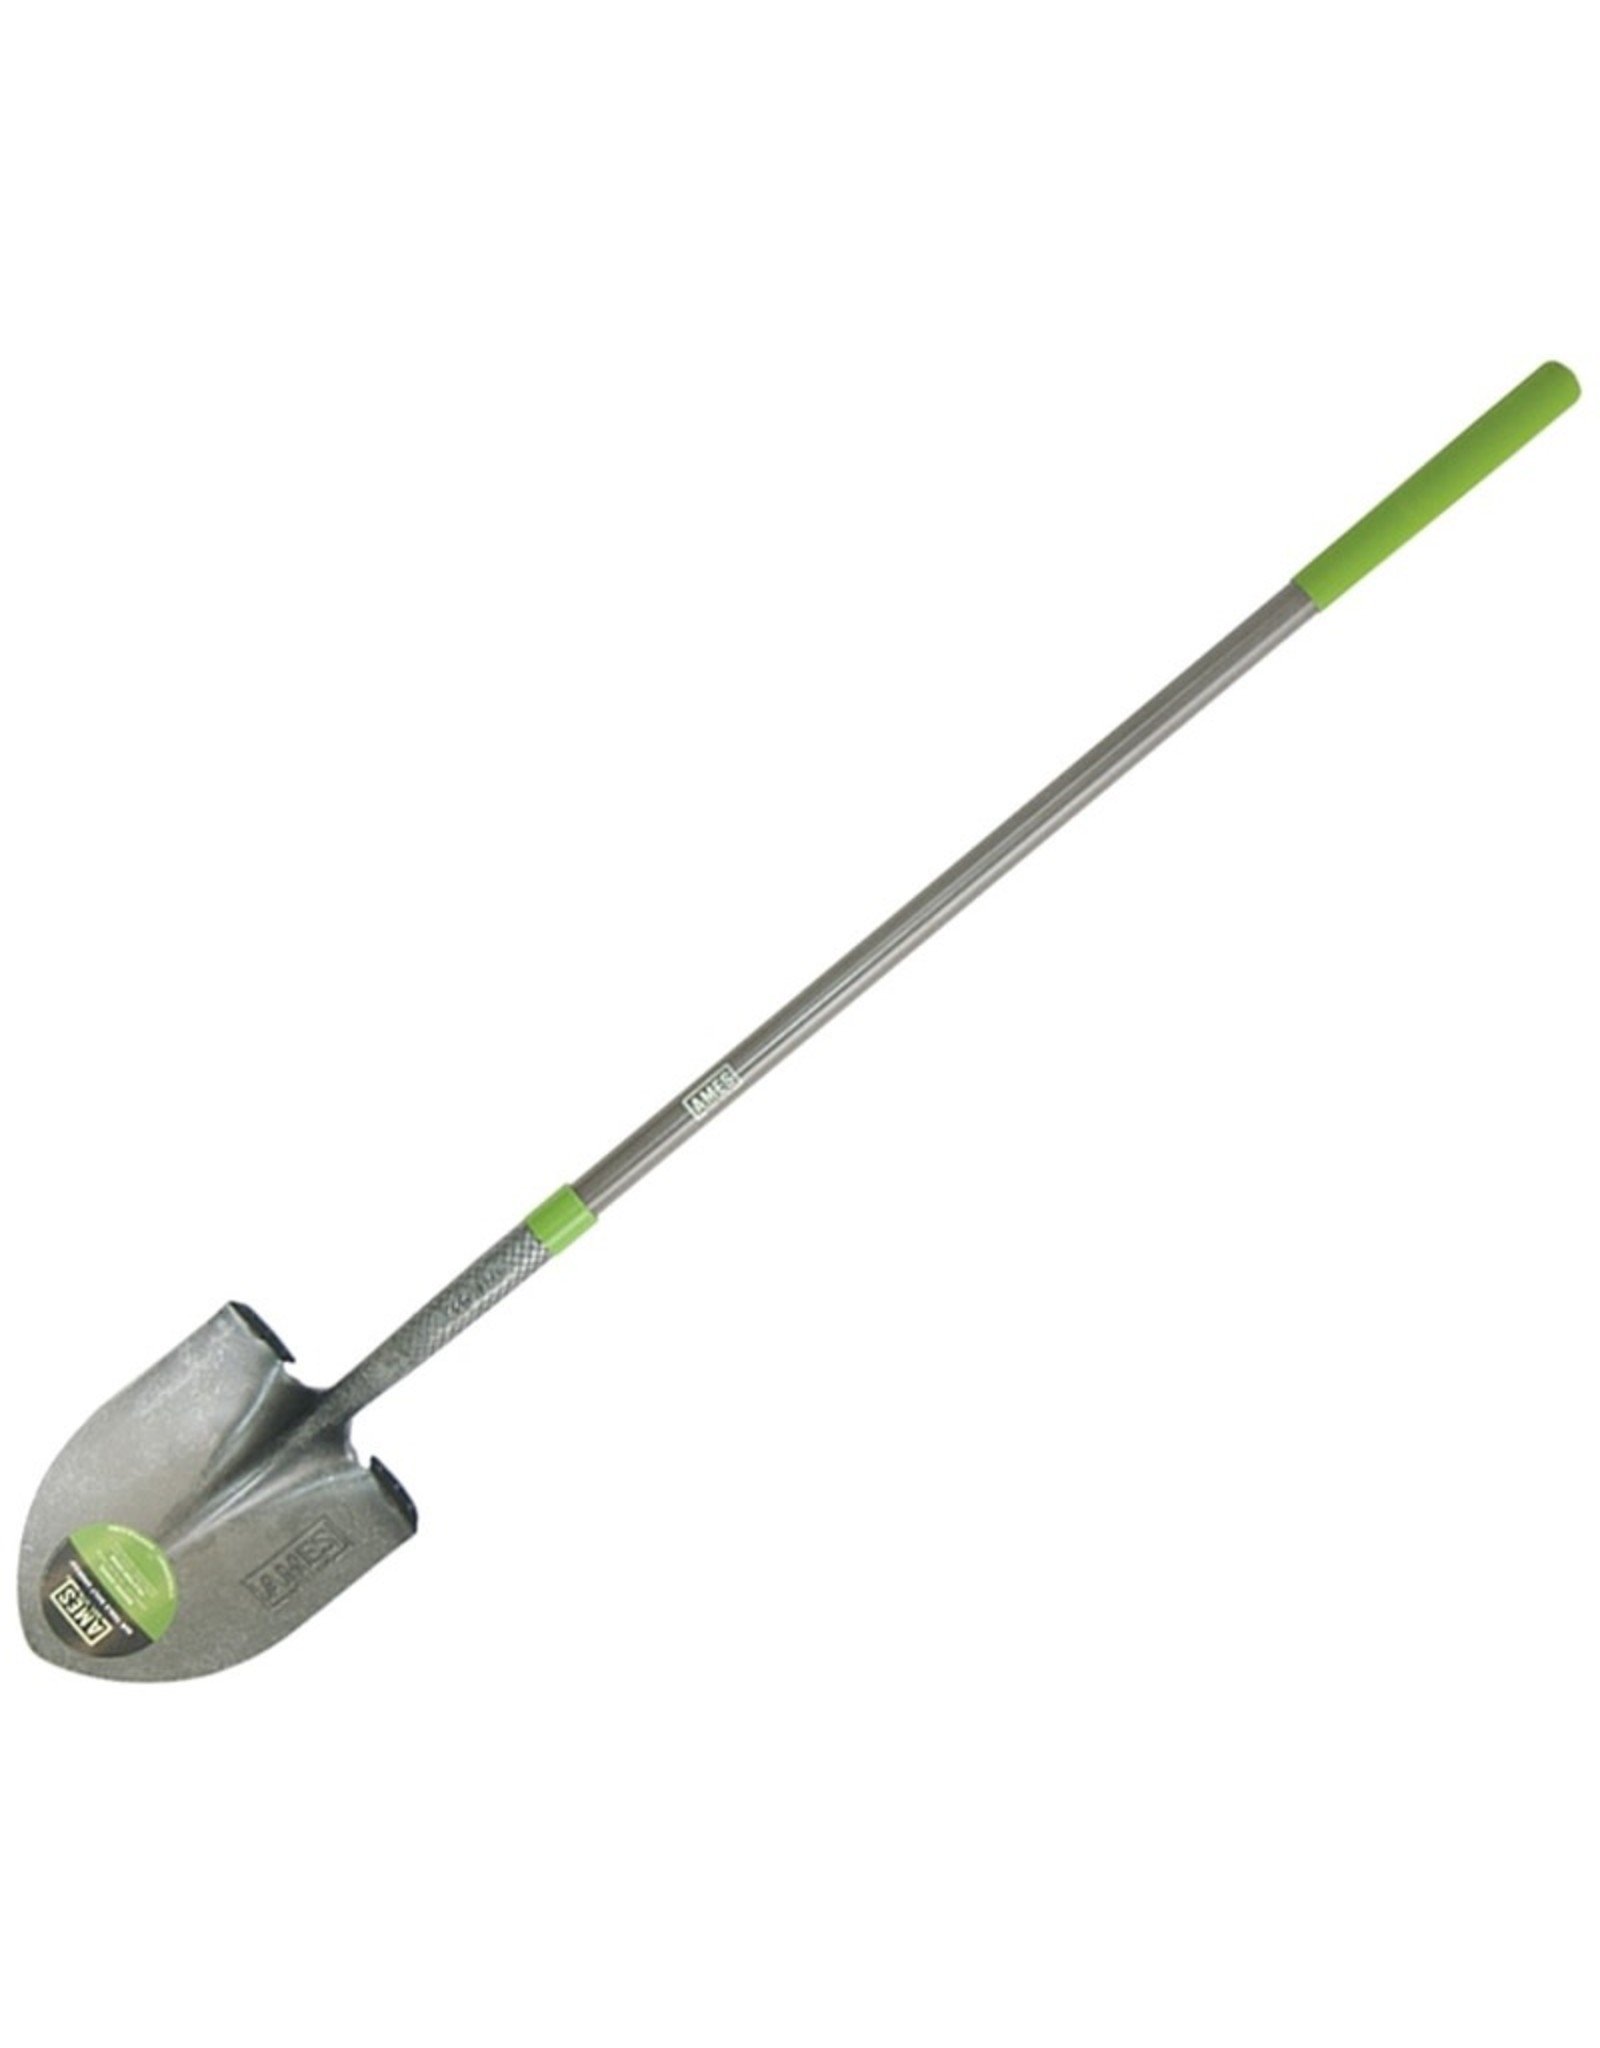 Ames AMES 25332100 Shovel with Crimp Collar, 8-3/4 in W Blade, Steel Blade, Fiberglass Handle, Long Handle, 48 in L Handle*